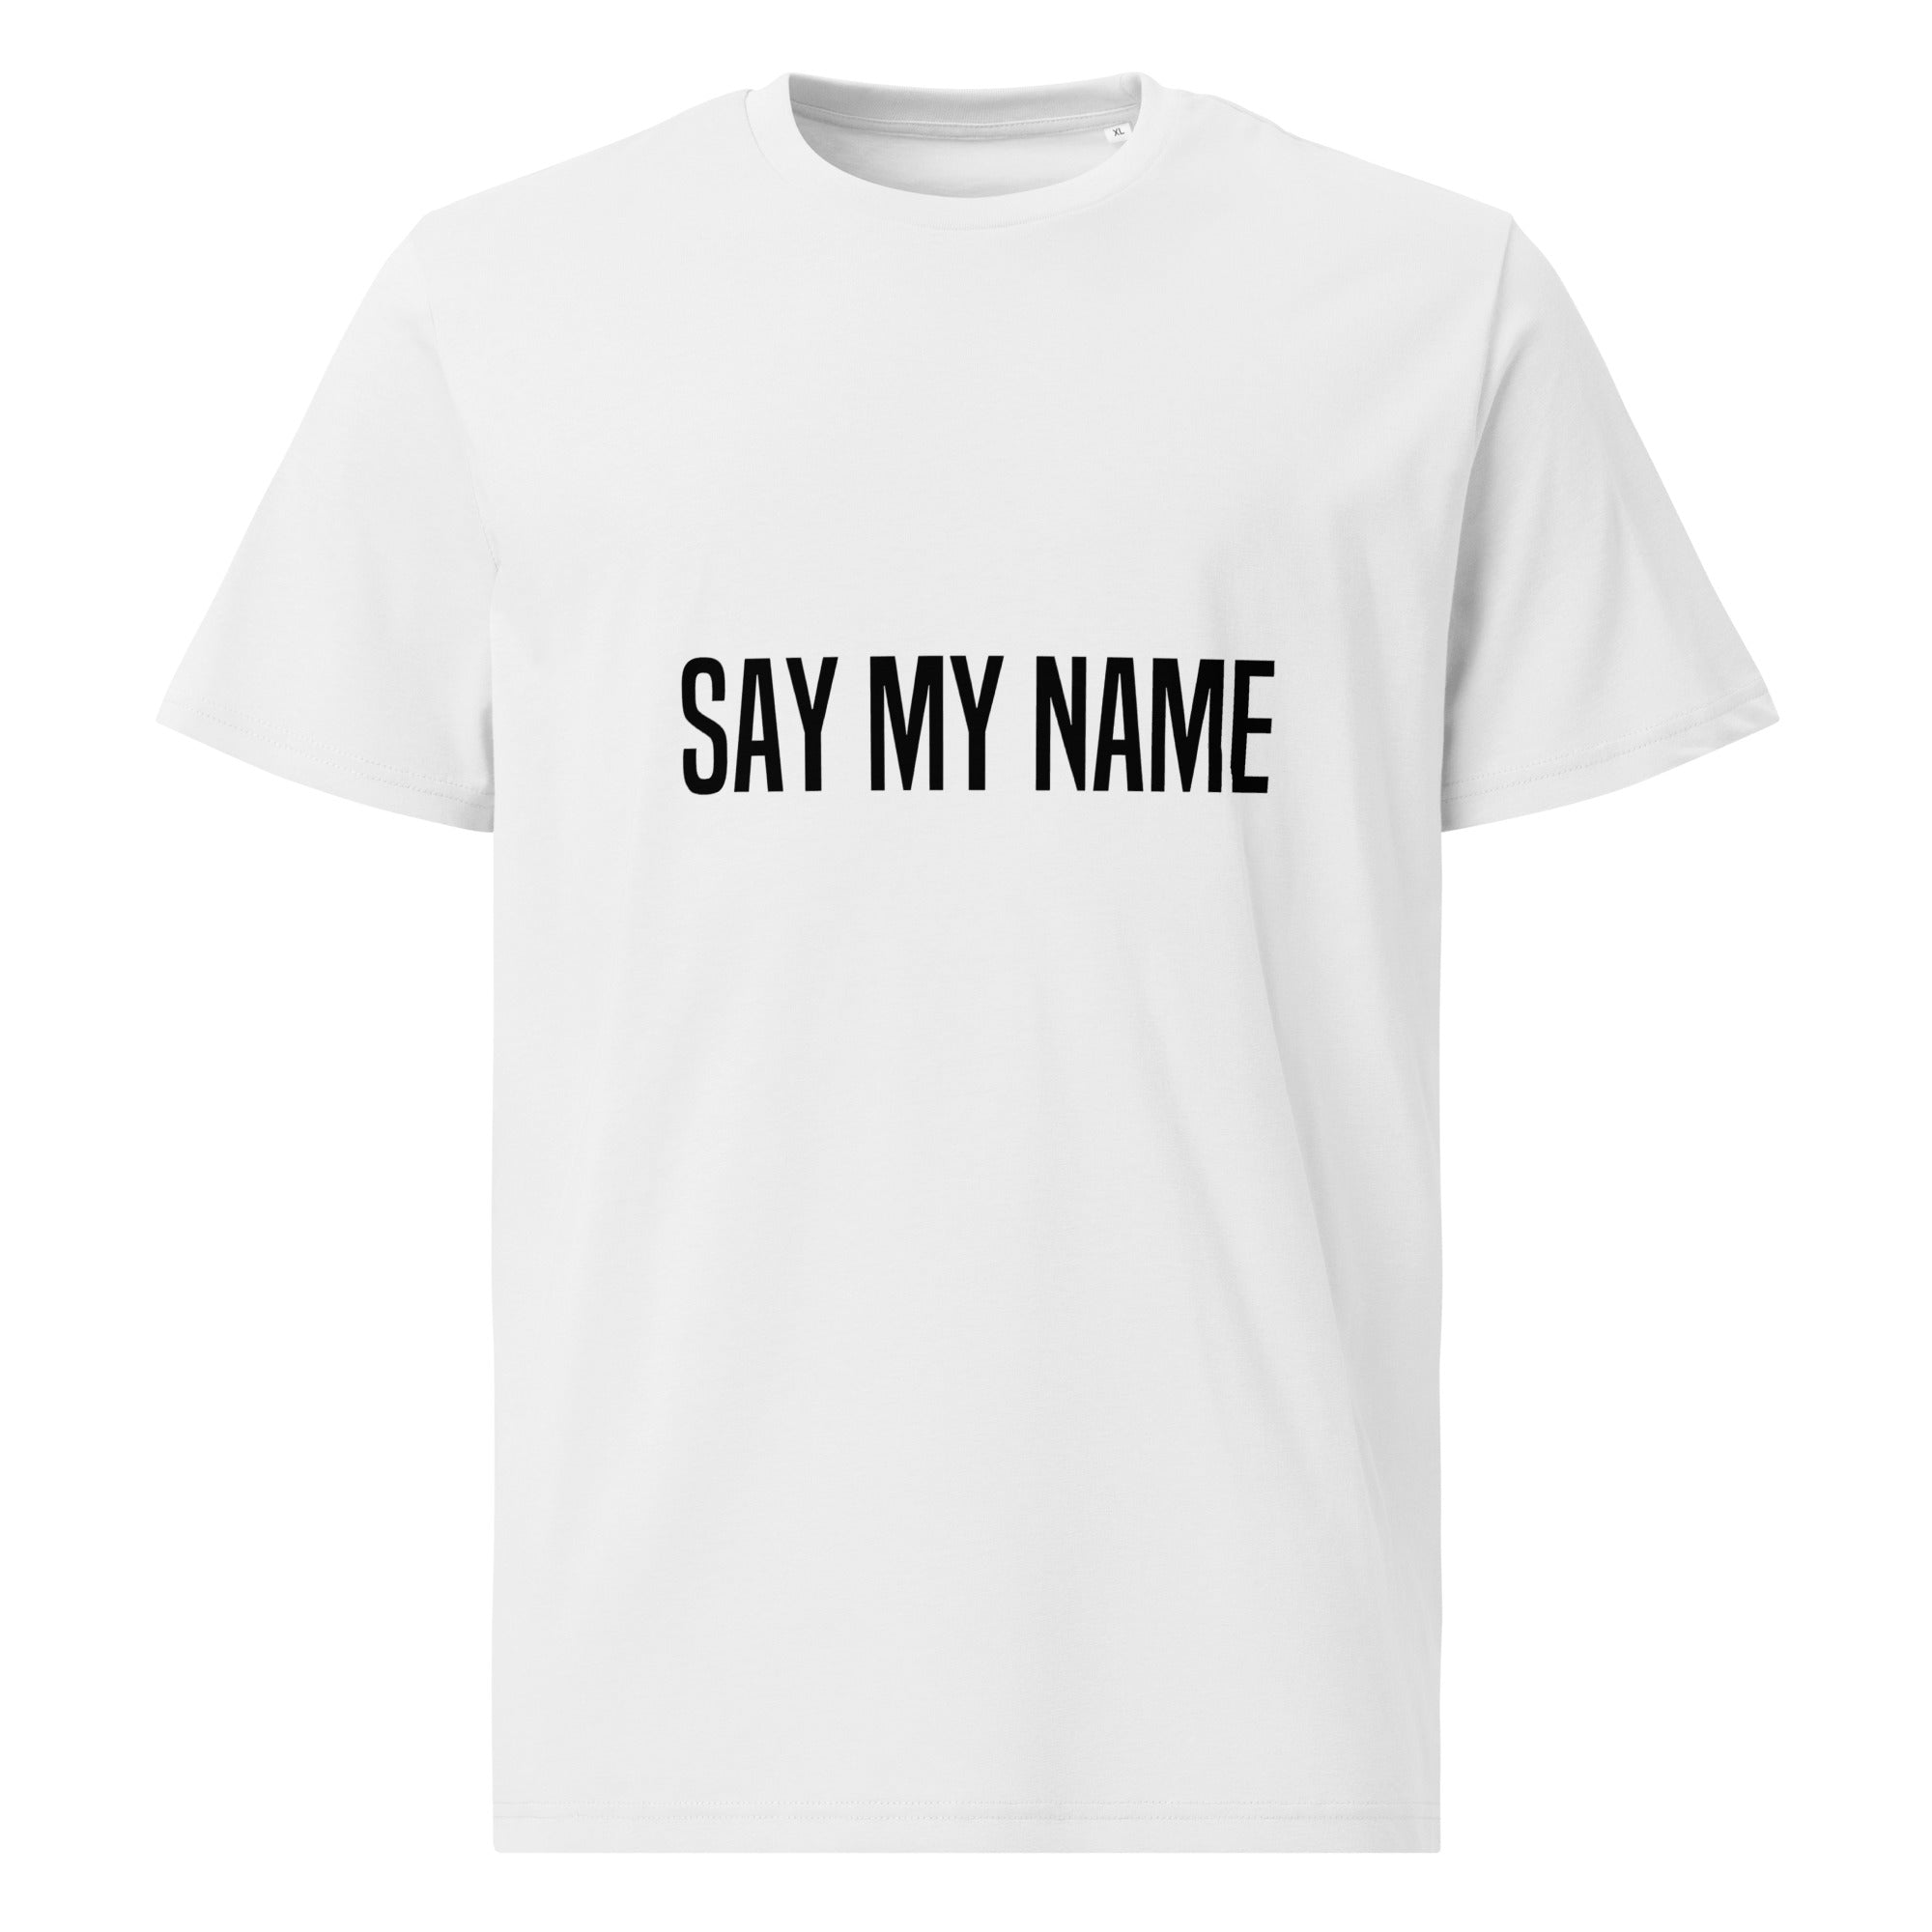 CSG unisex T-SHIRT “SAY MY NAME” black